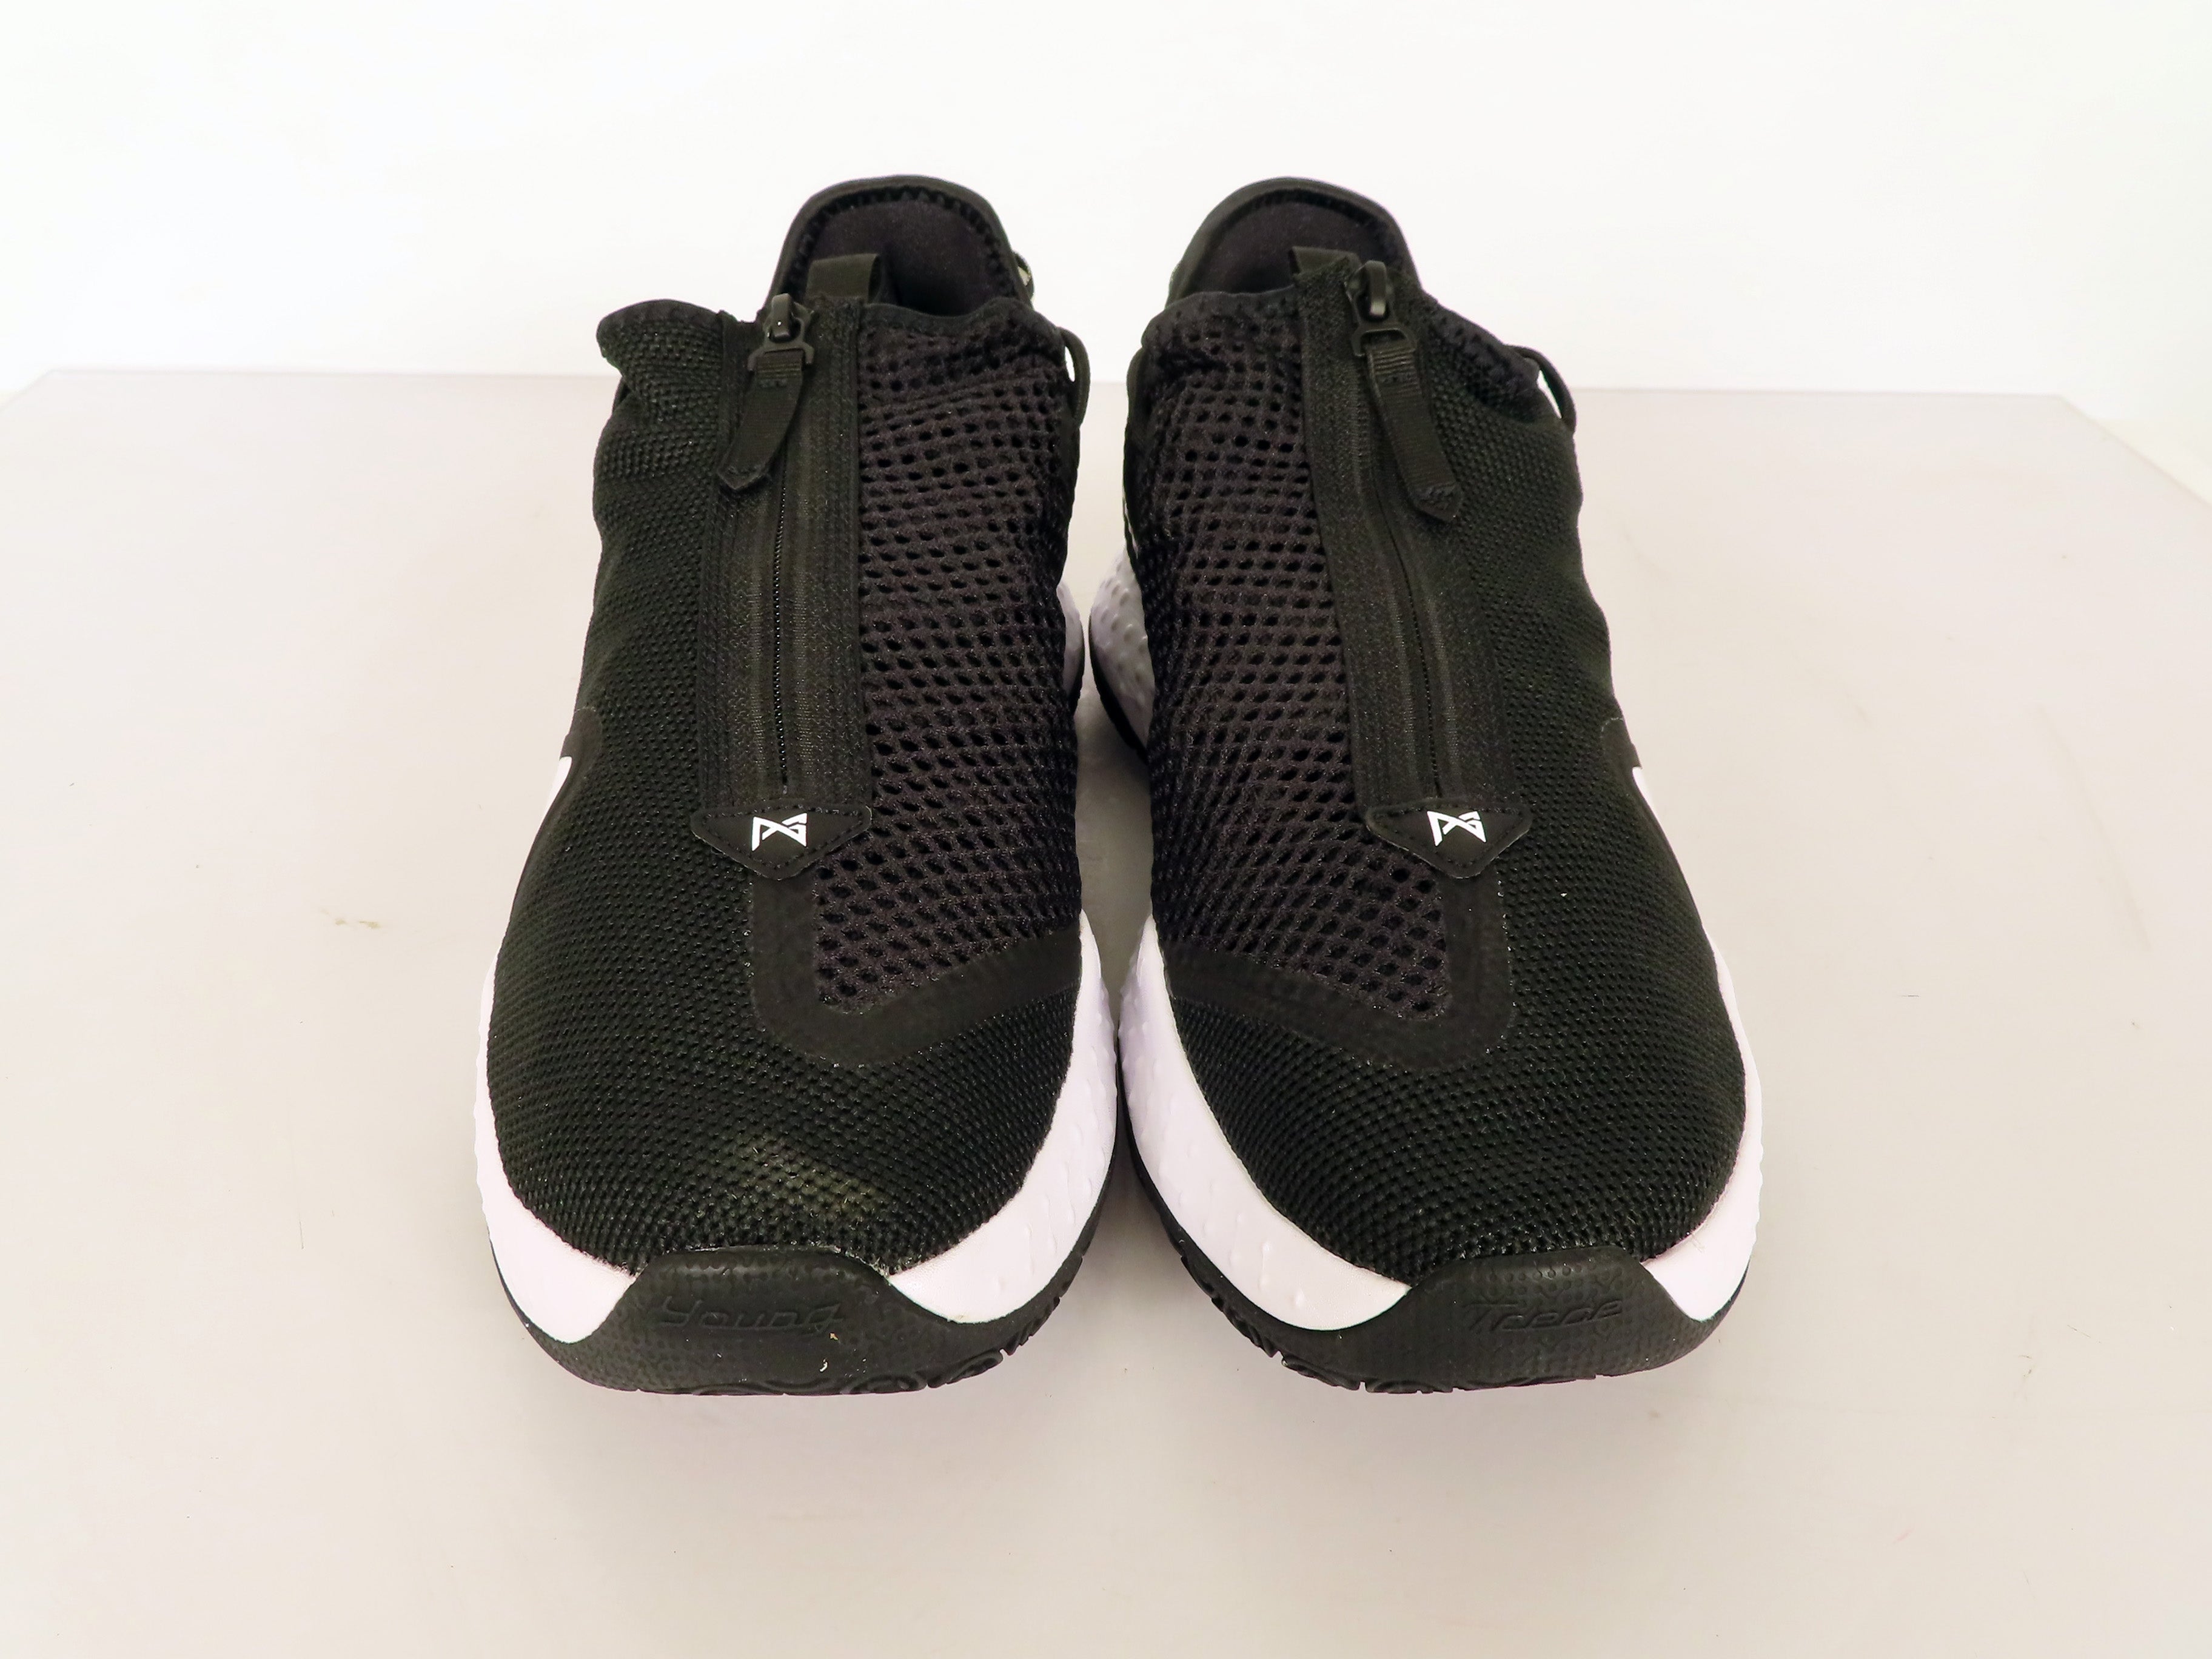 NIKE Men's Low-Top Sneakers Basketball Shoe, Black